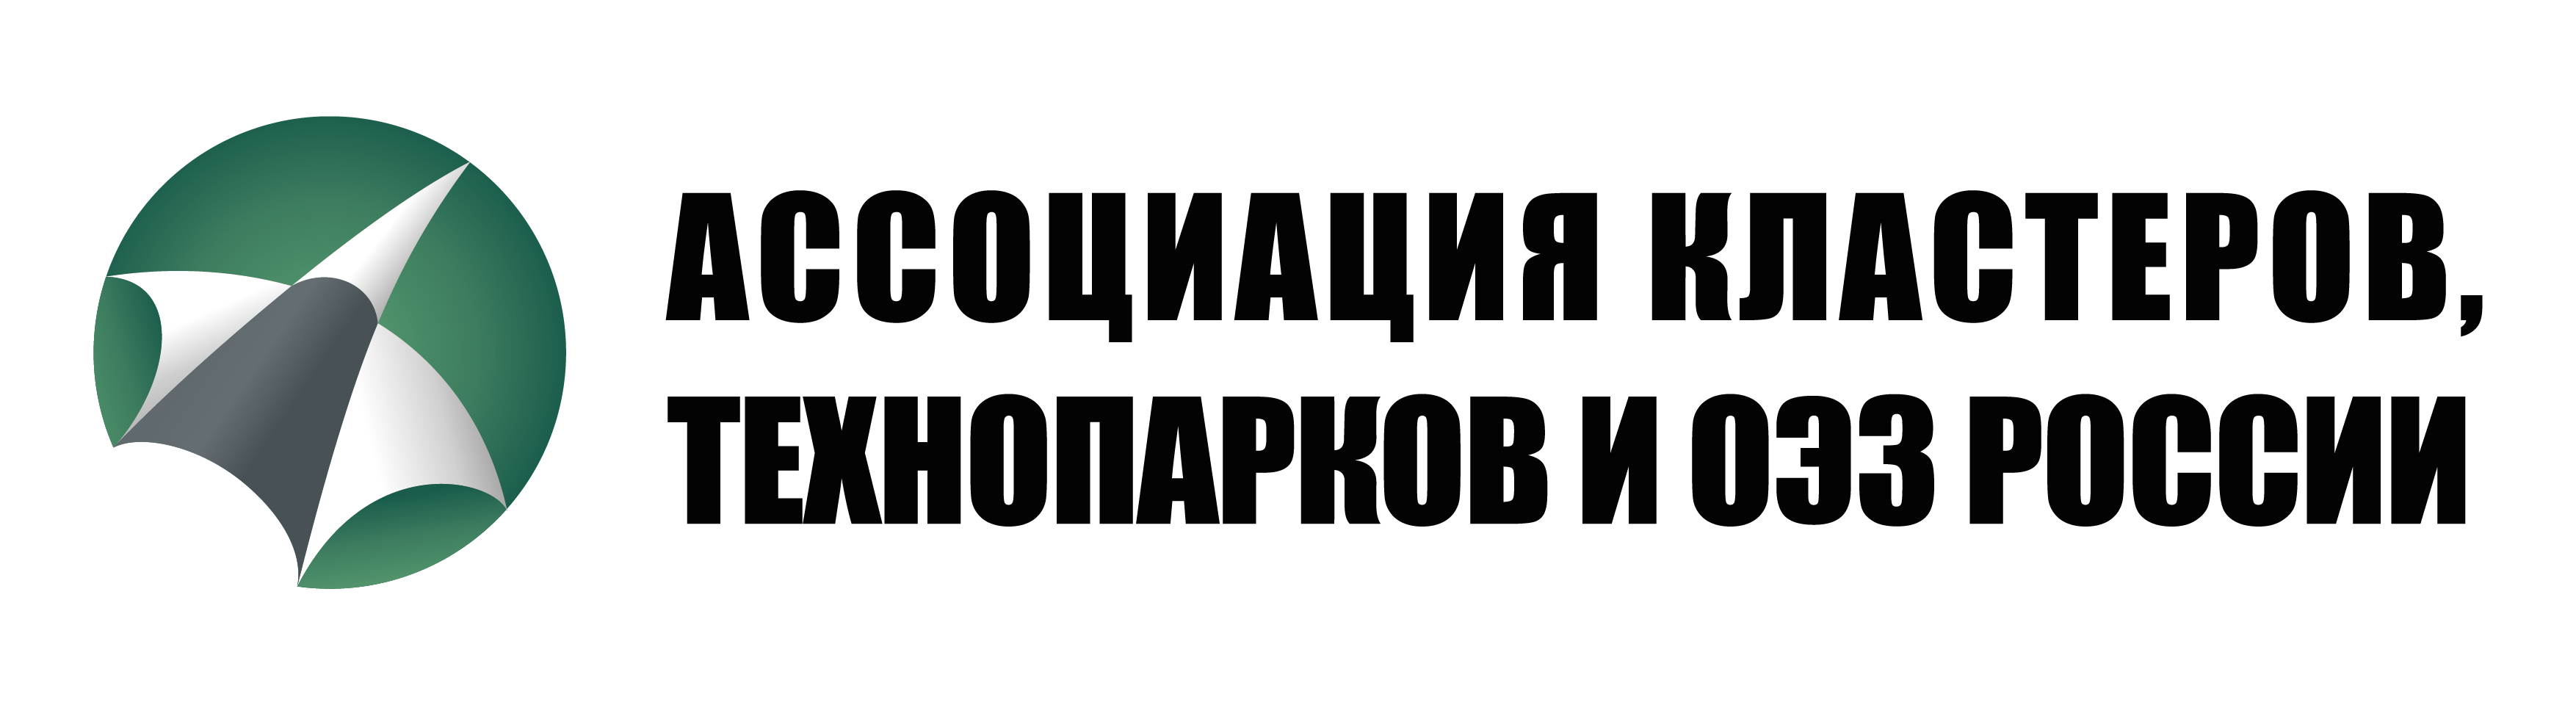 logo-main-ru.png